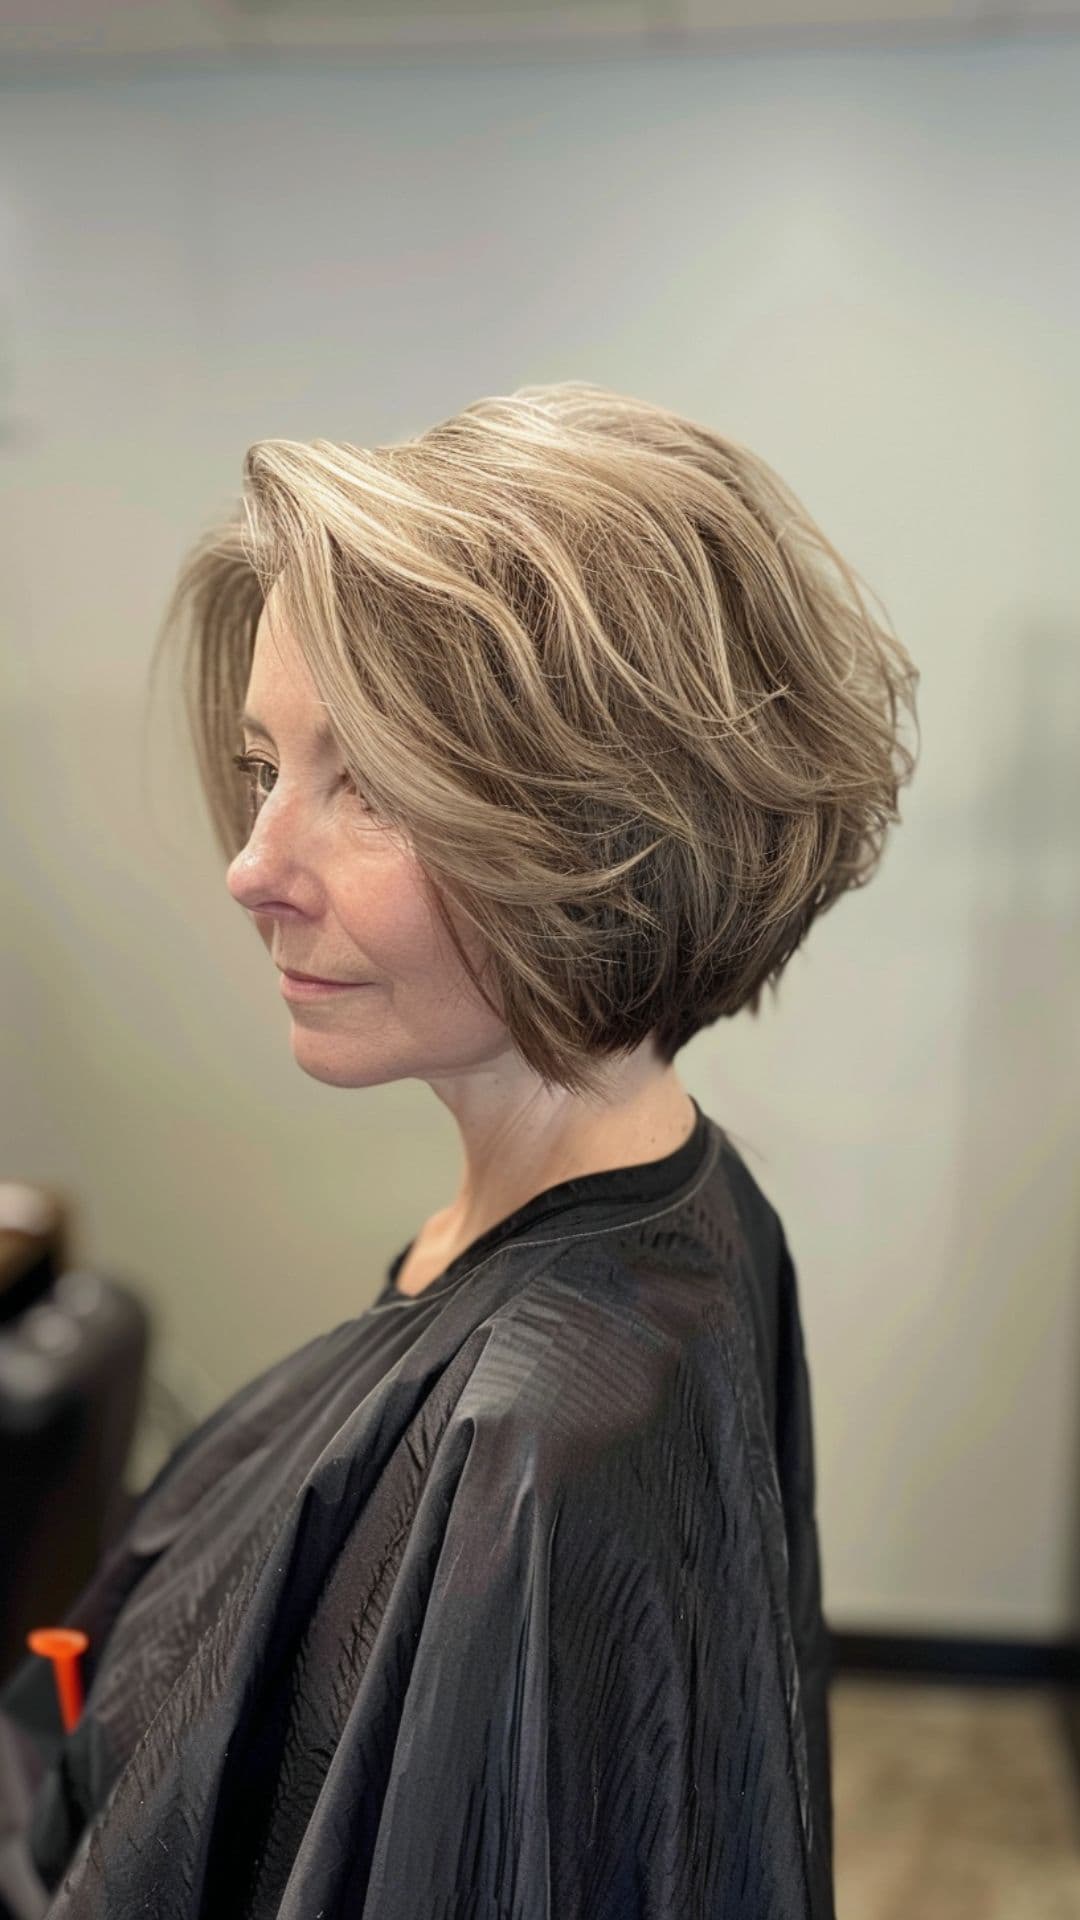 An older woman modelling a textured bob cut.